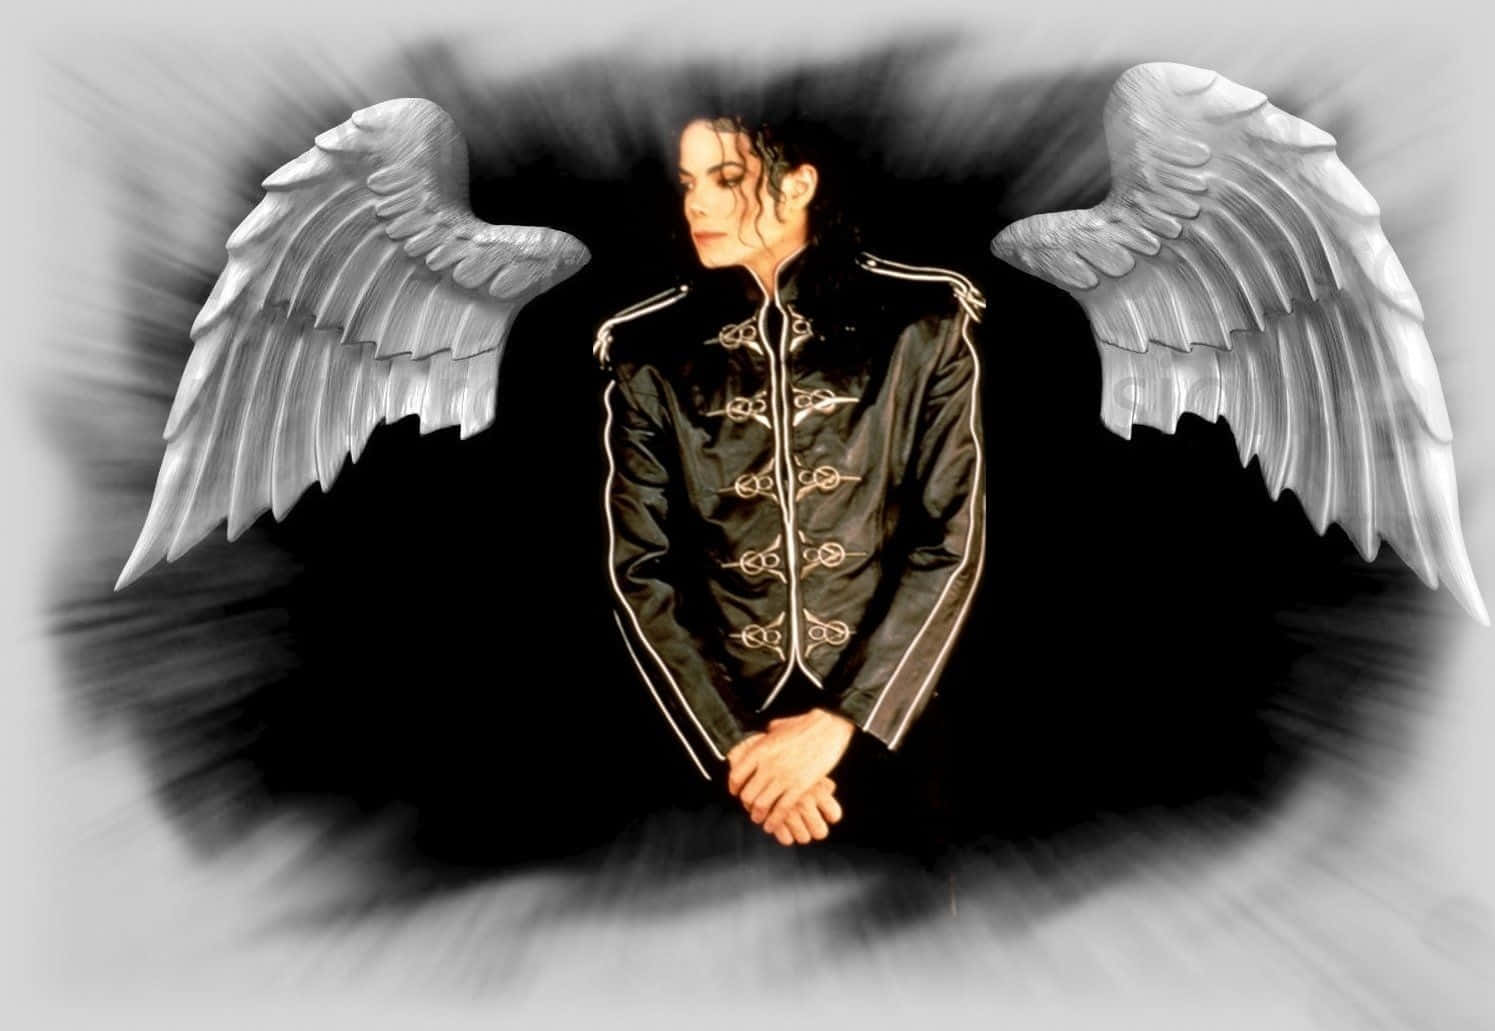 Hintergrundbildvon Michael Jackson In 1495 X 1031